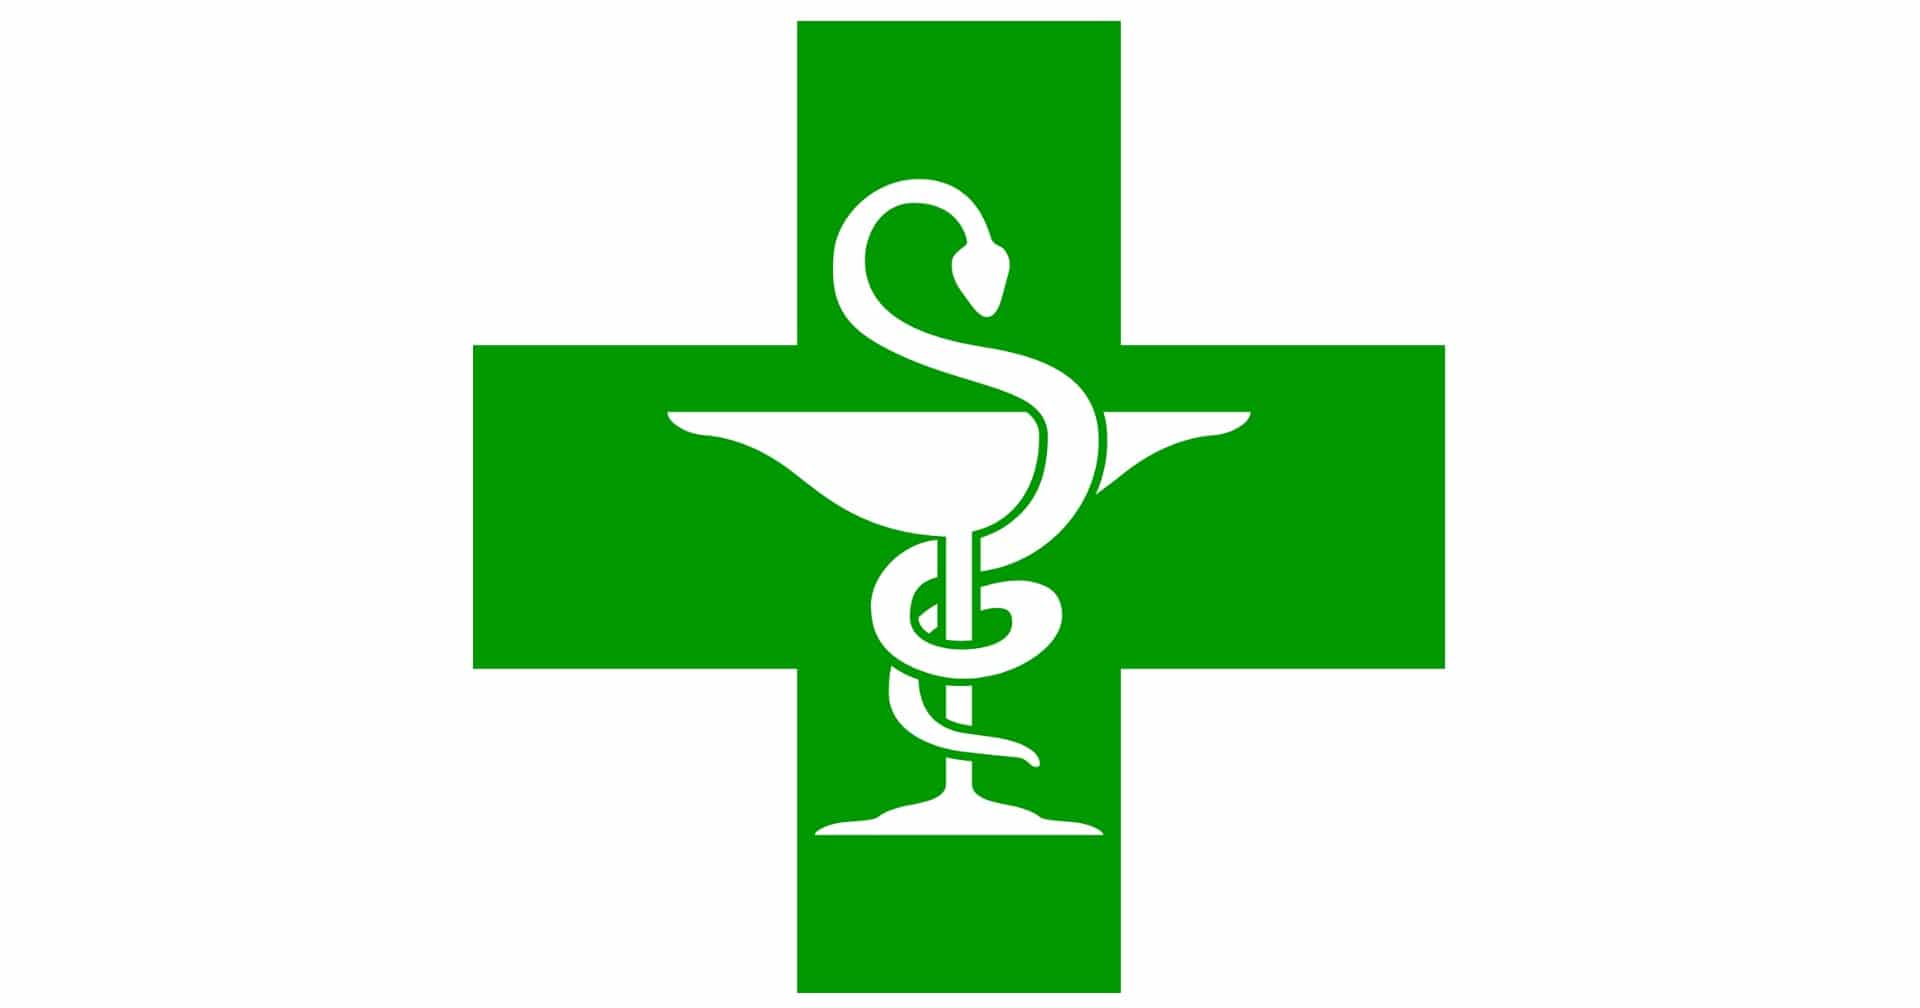 Pharmacie logo : histoire, signification et évolution, symbole